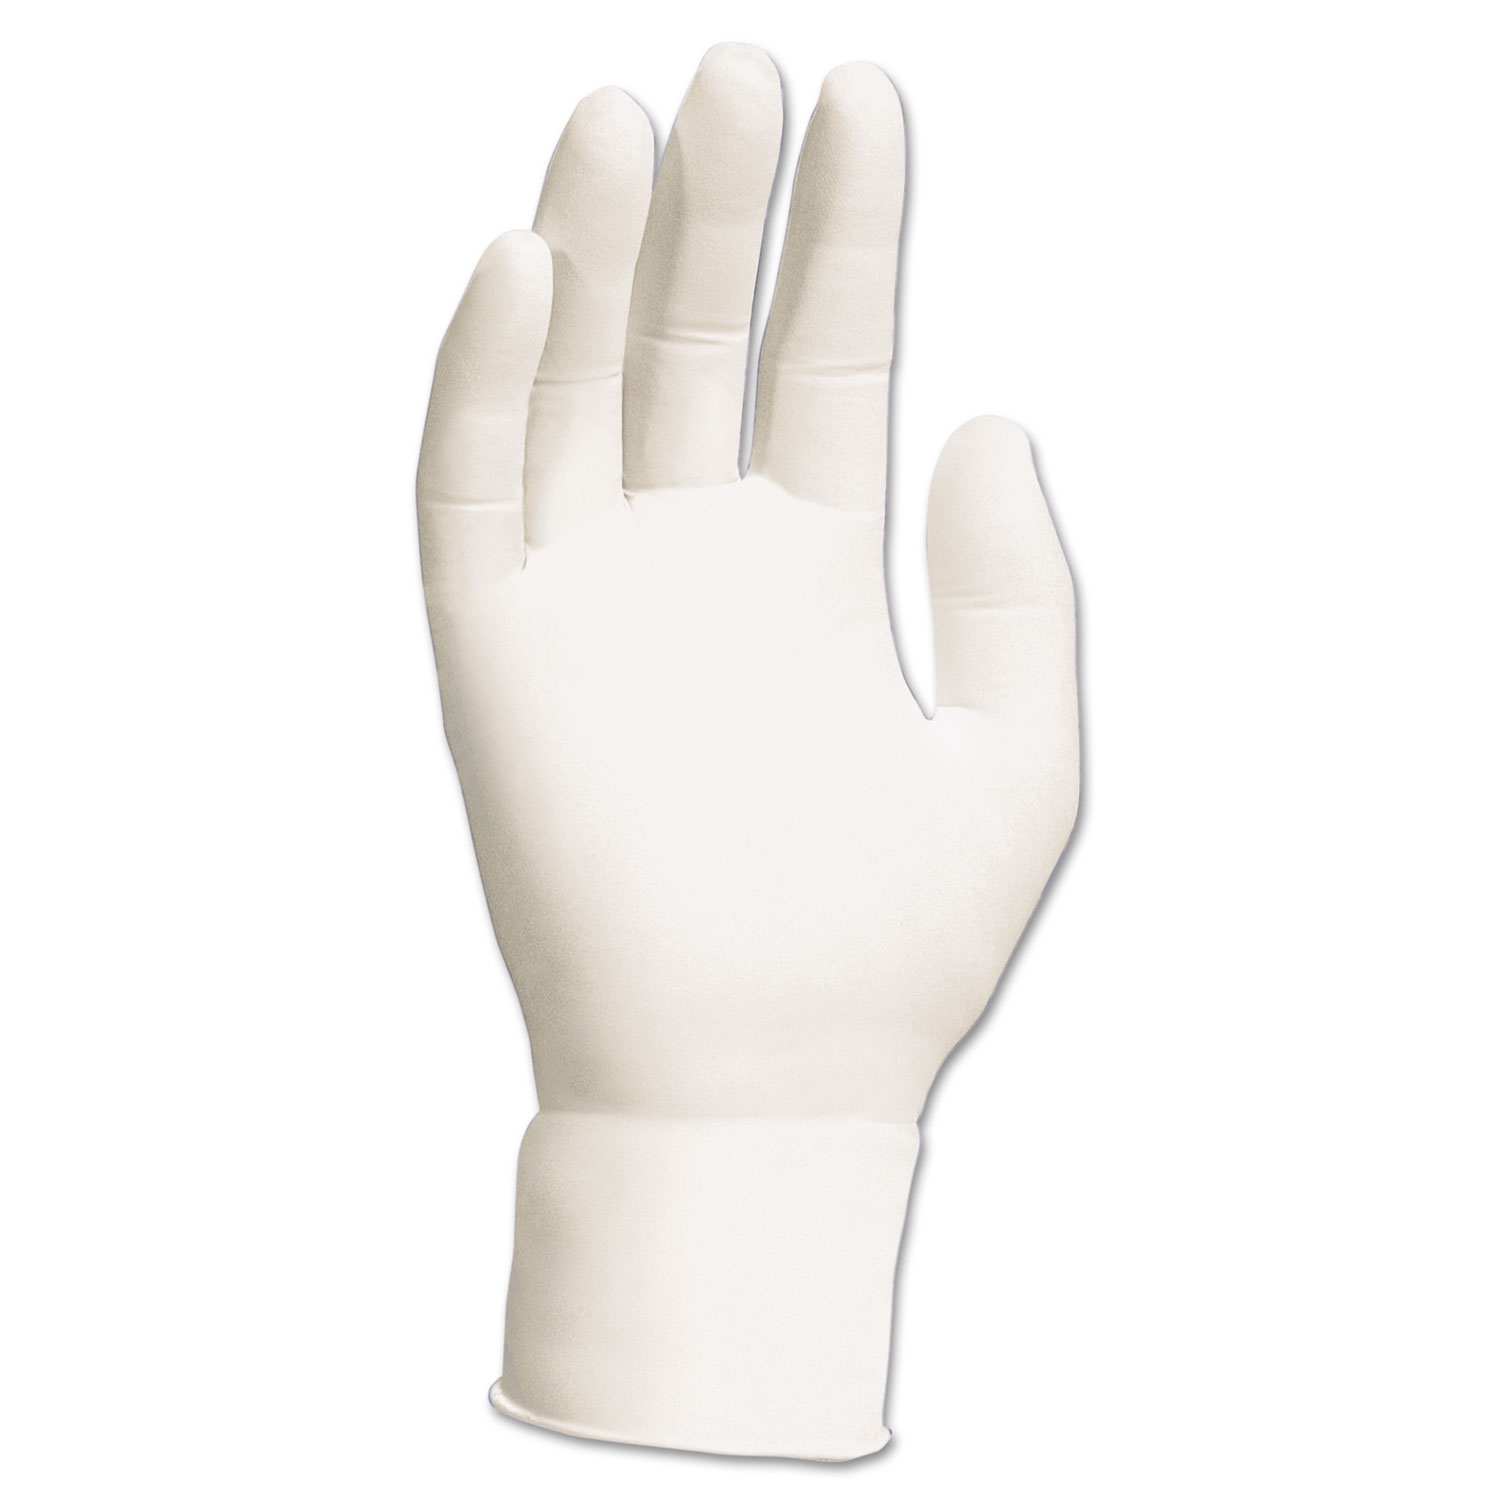  Kimtech KCC 56864 G5 Nitrile Gloves, Powder-Free, 305 mm Length, Small, White, 100/Pack (KCC56864) 